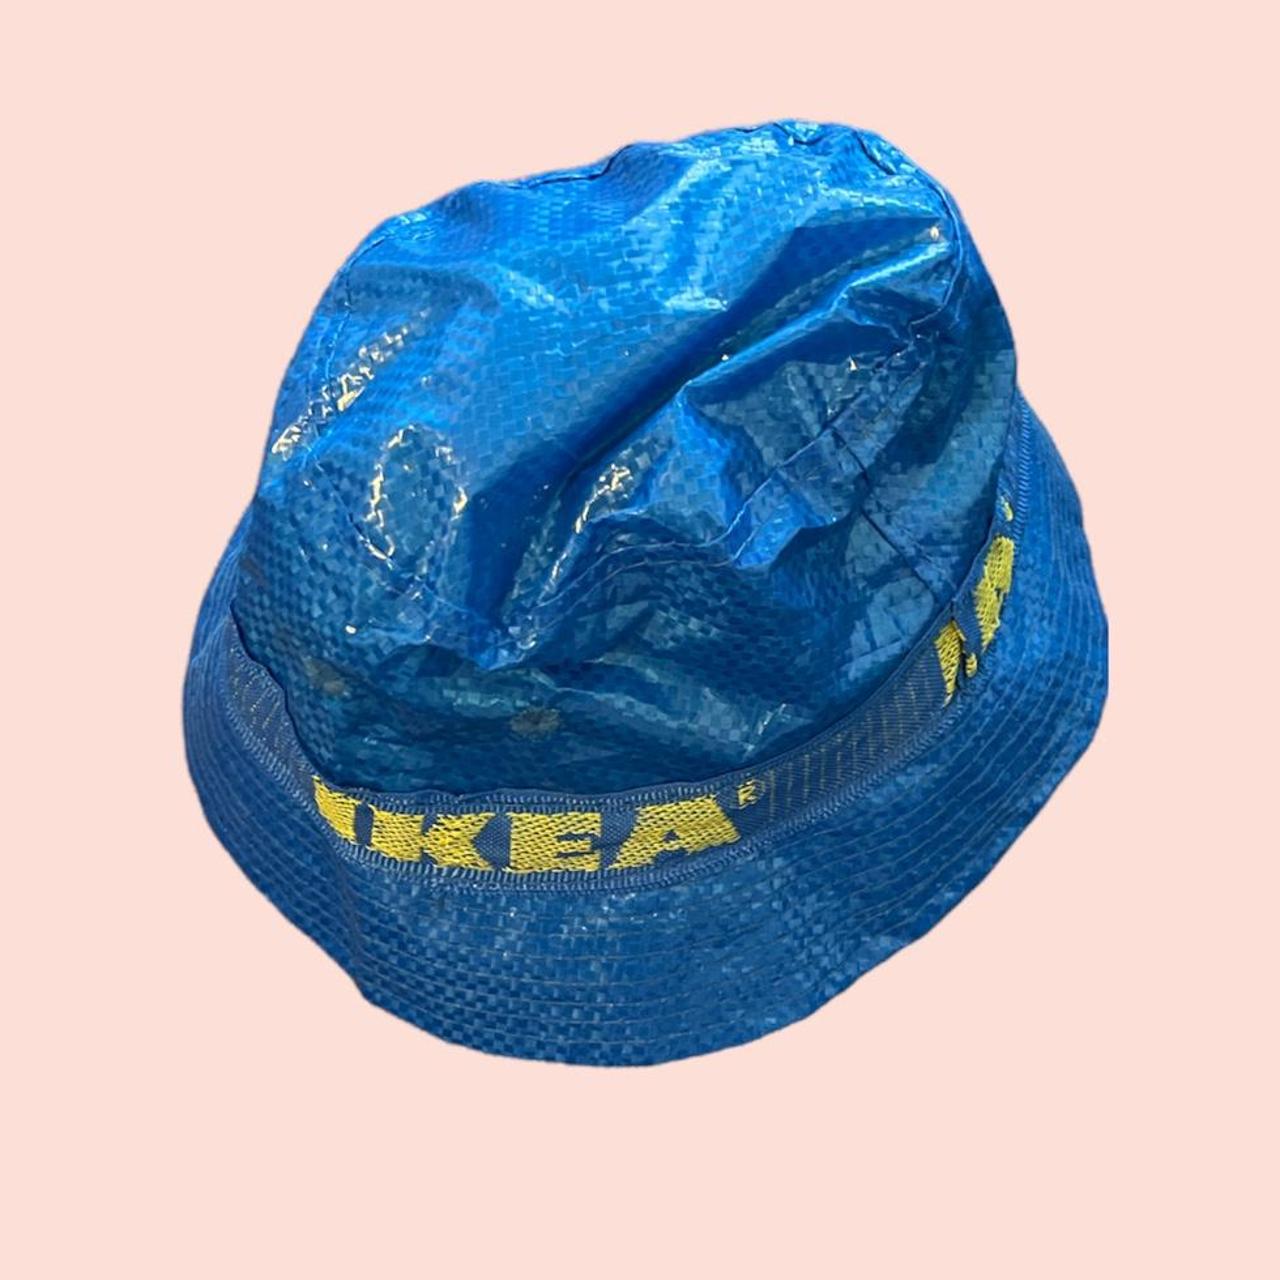 Product Image 2 - ikea bucket hat
never worn 

🌟PRICE